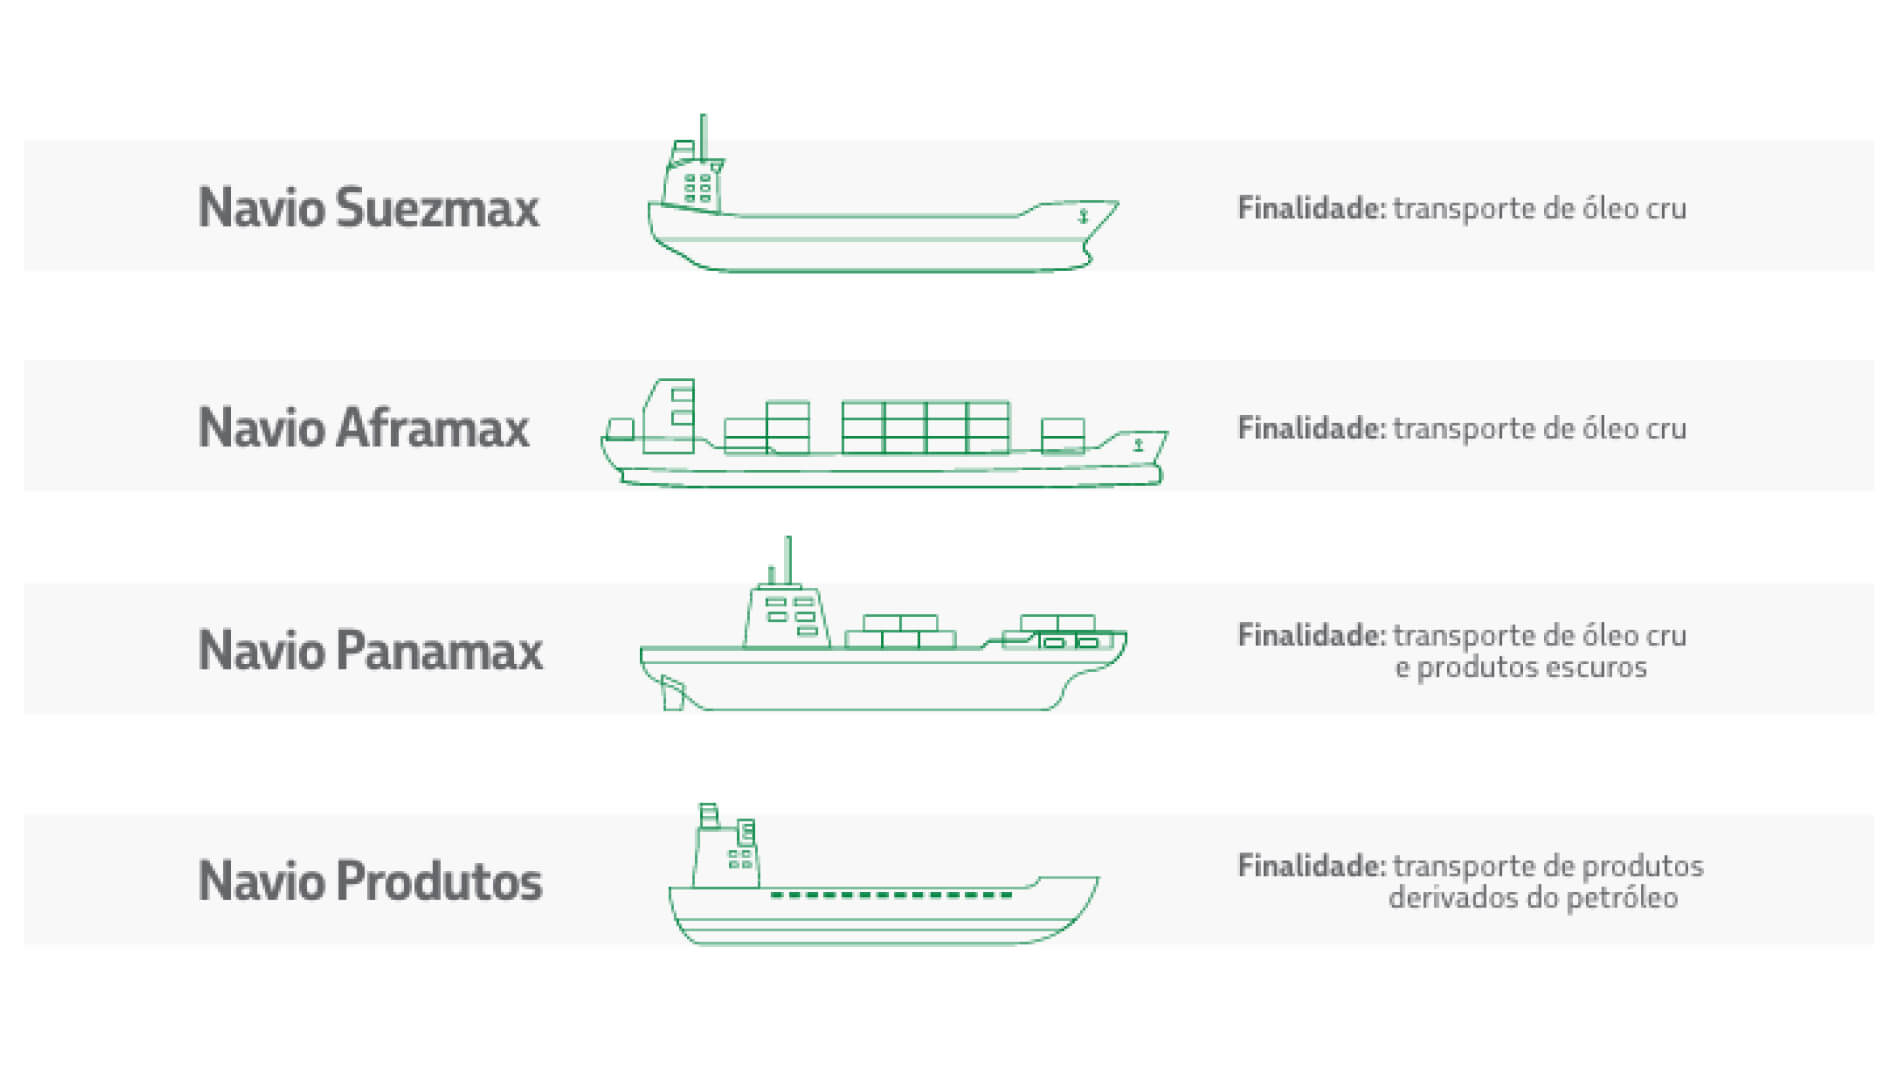 Principais tipos de navio da Transpetro: Suezmax, Posicionamento Dinâmico, Aframax, Panamax, Produtos e Gaseiro.